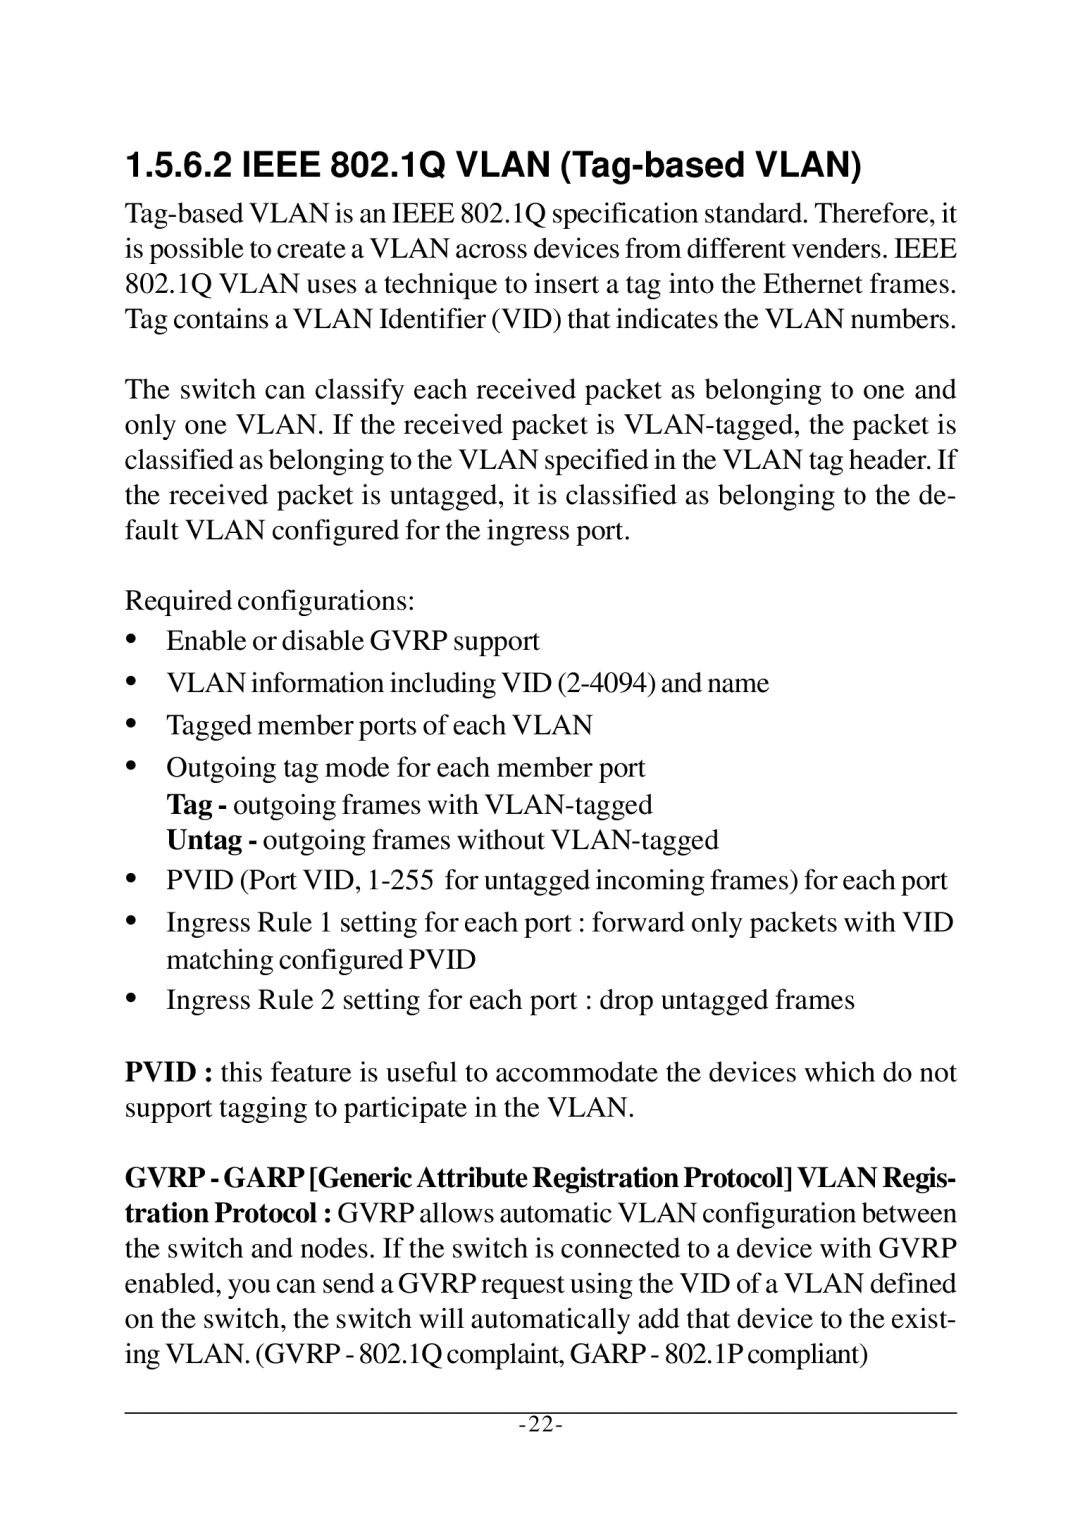 KTI Networks KS-2260 Ieee 802.1Q Vlan Tag-based Vlan, Gvrp Garp Generic Attribute Registration Protocol Vlan Regis 